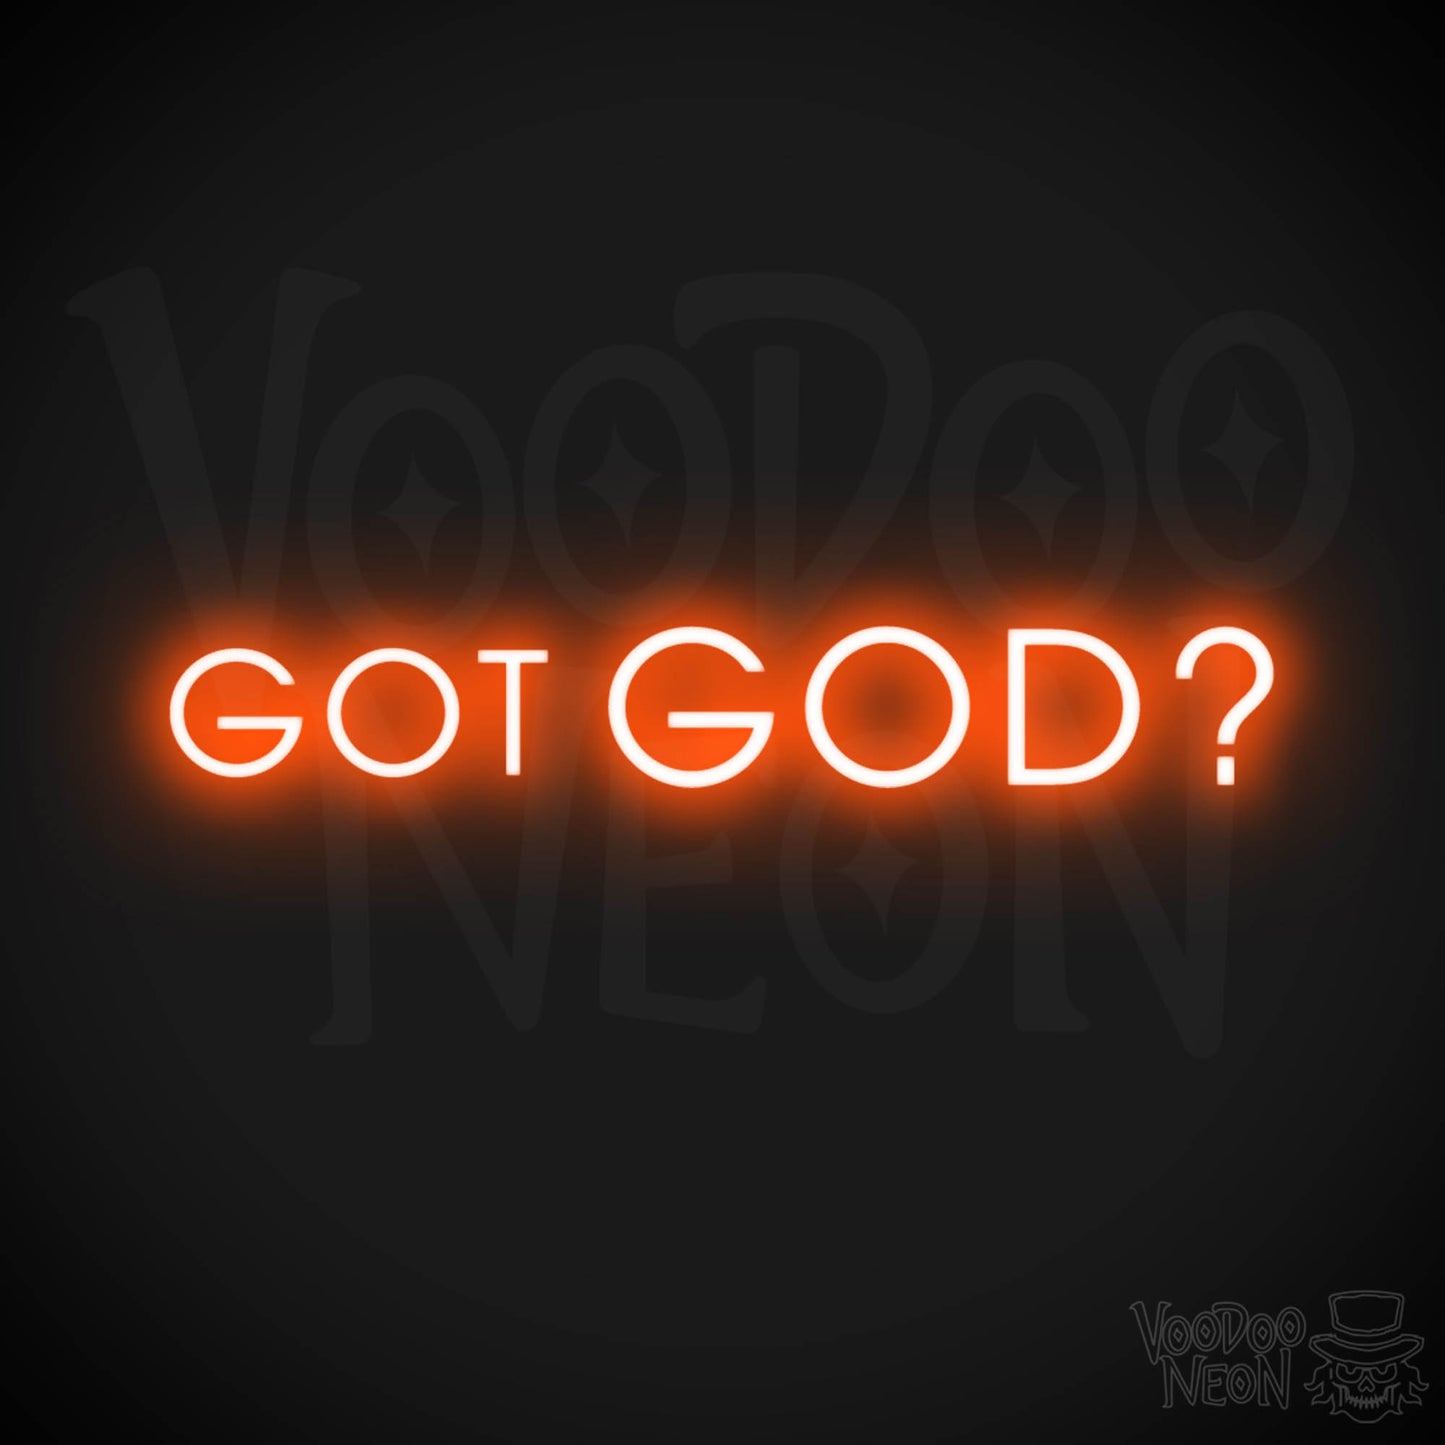 Got God Neon Sign - Neon Got God Sign - Neon God Sign - LED Wall Art - Color Orange